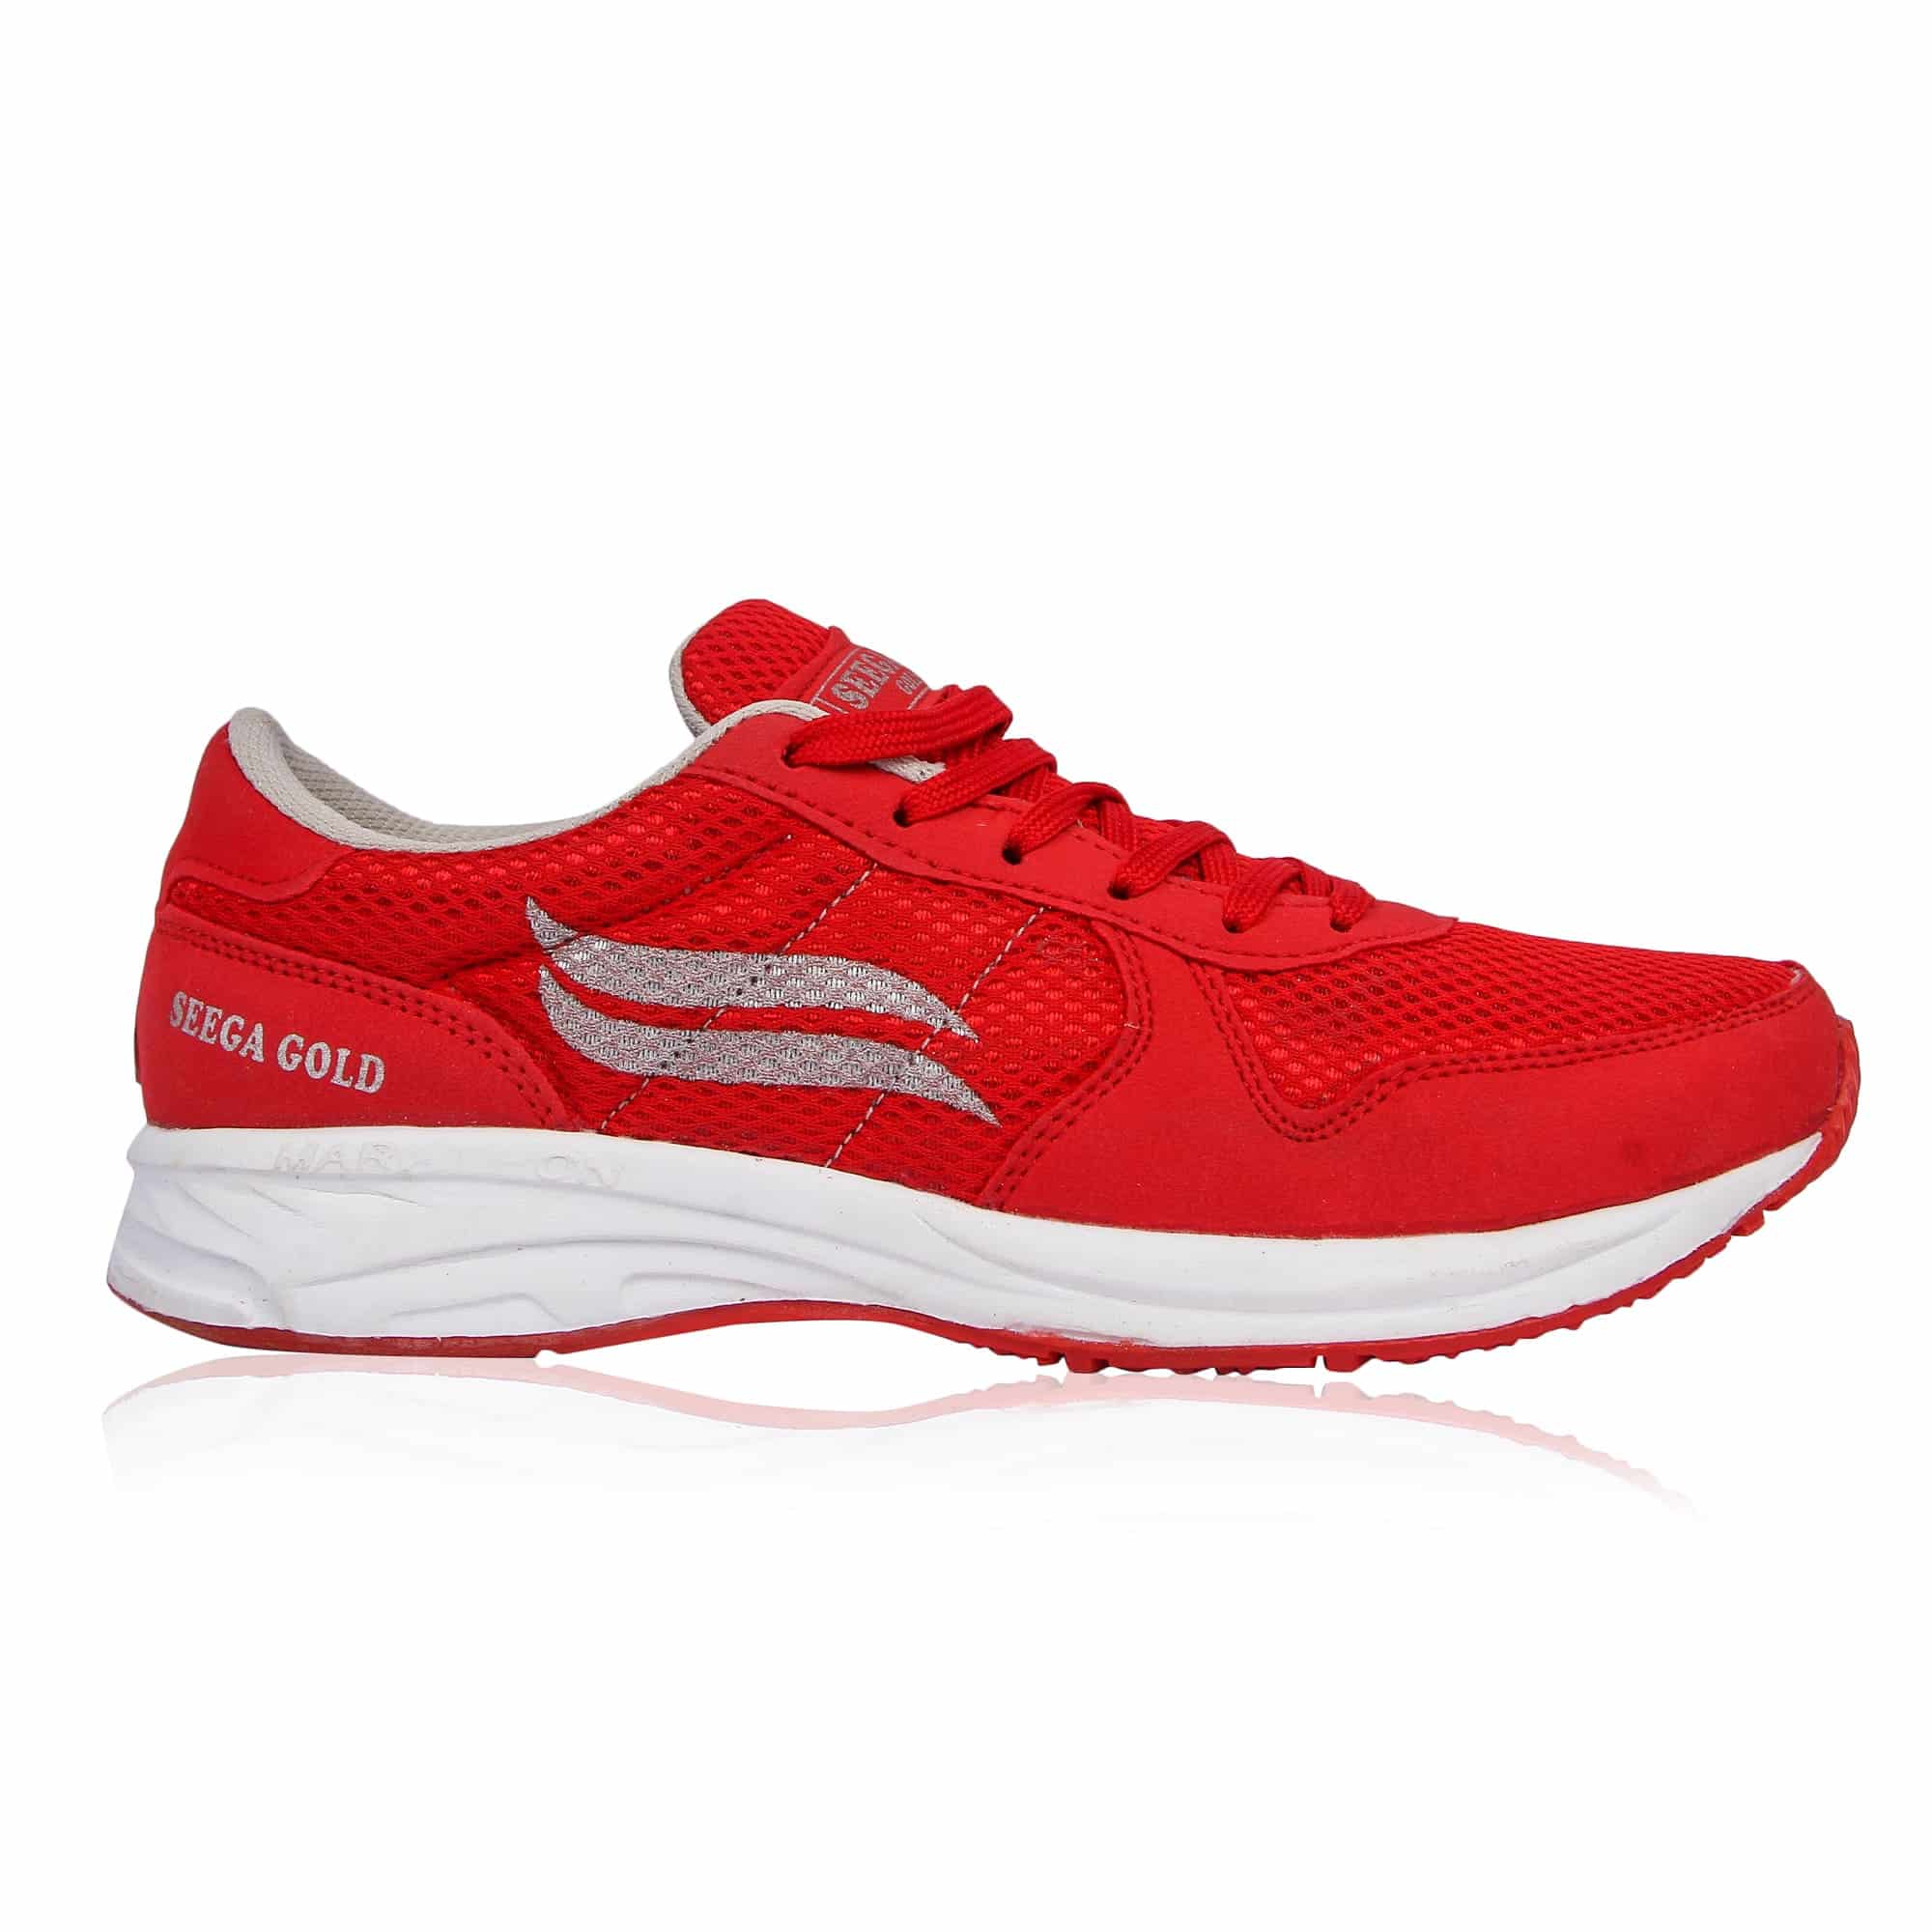 Seega Gold Marathon 01 Red 2 Men sports shoe